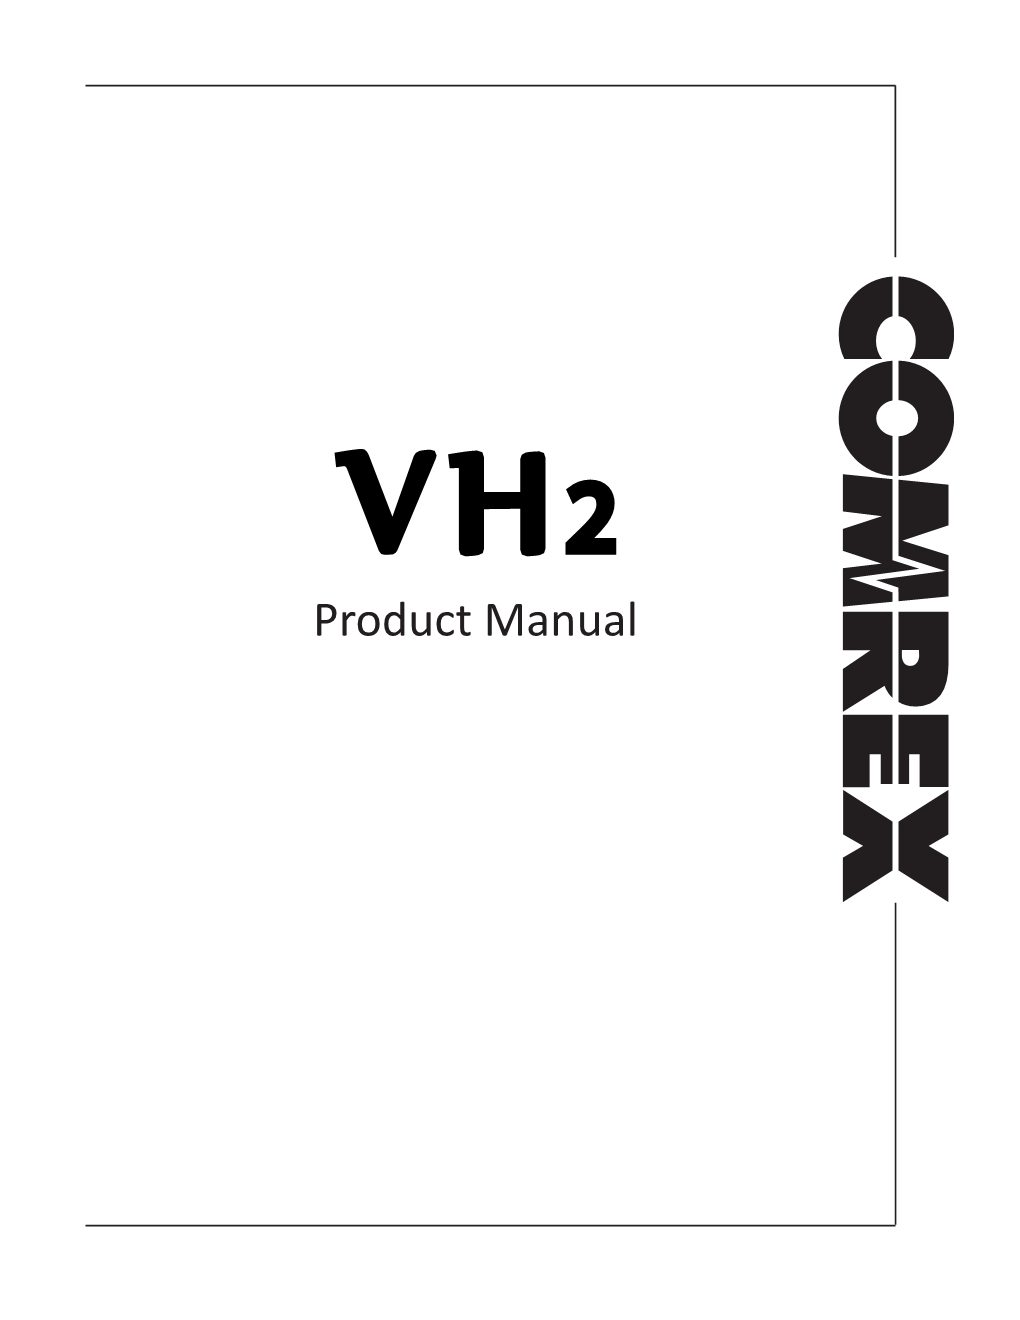 Product Manual VH2 Manual